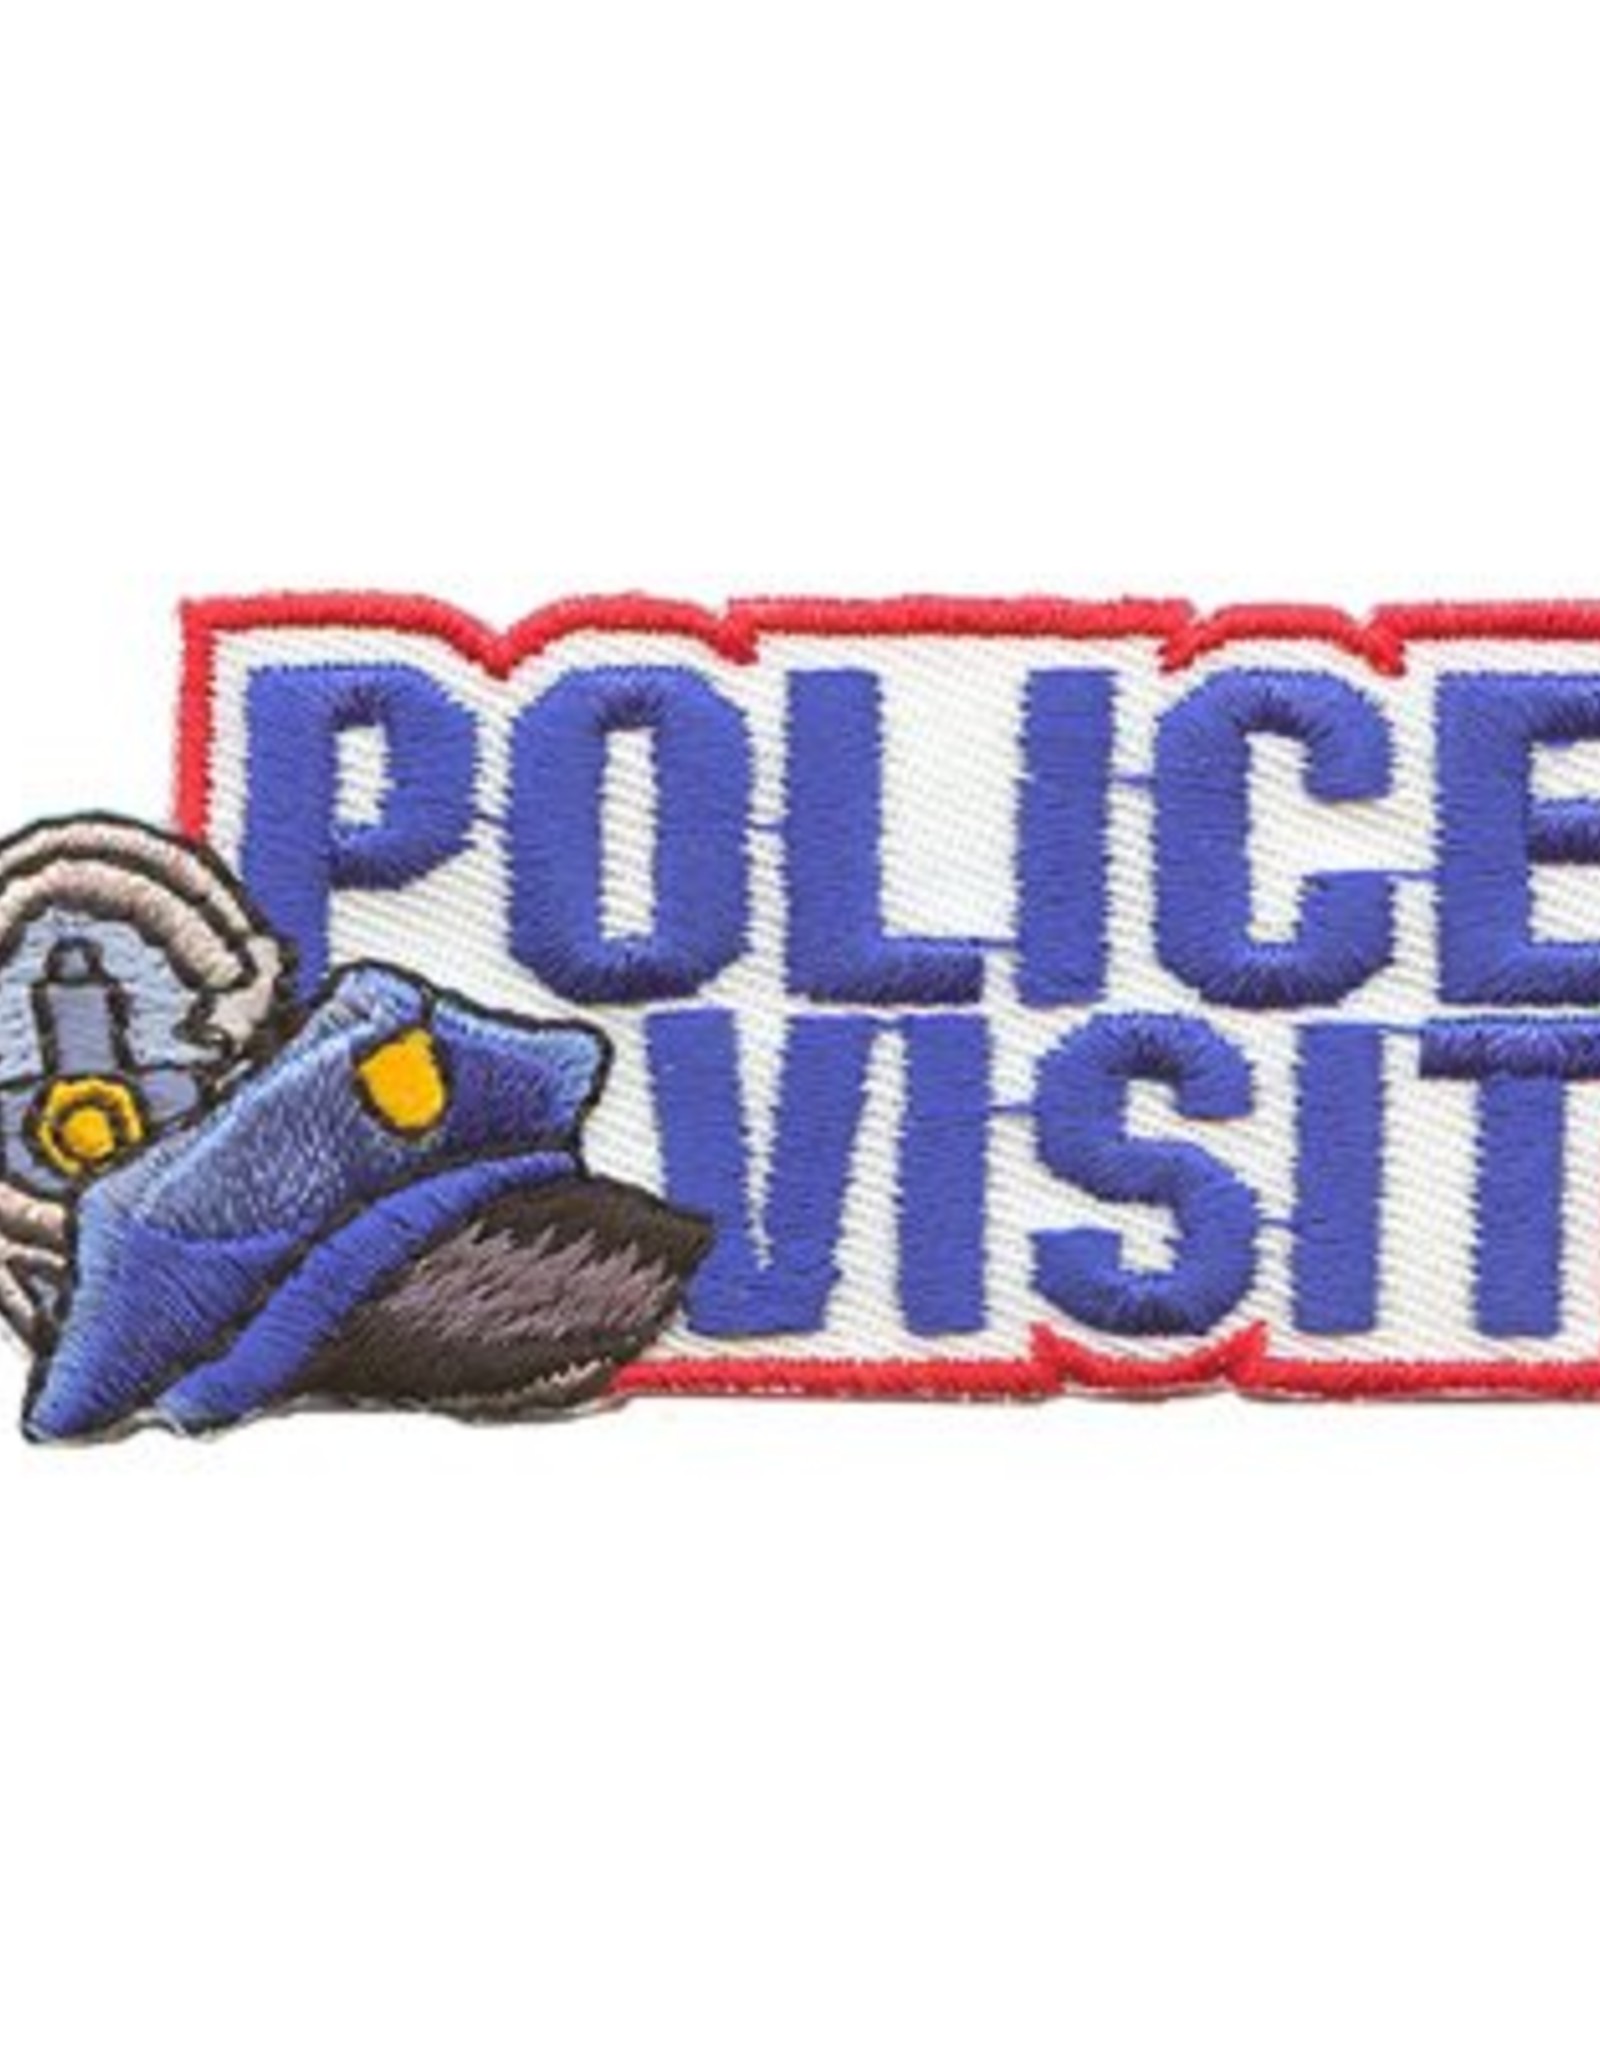 Advantage Emblem & Screen Prnt *Police Visit Fun Patch